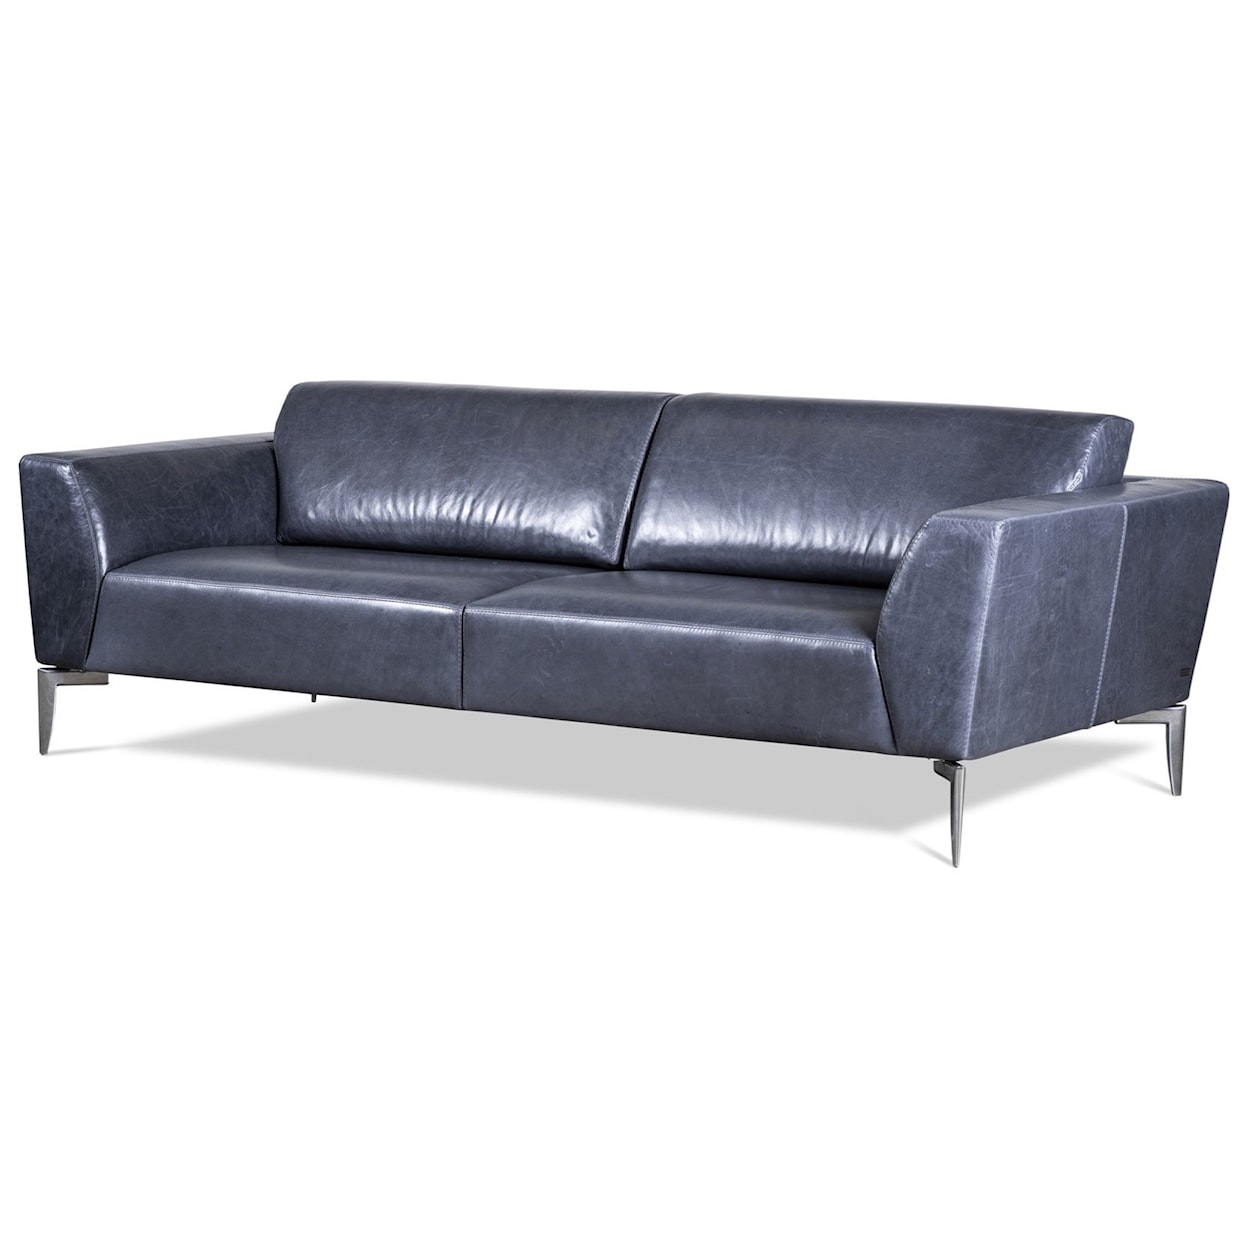 American Leather Adriana Two-Seat Sofa